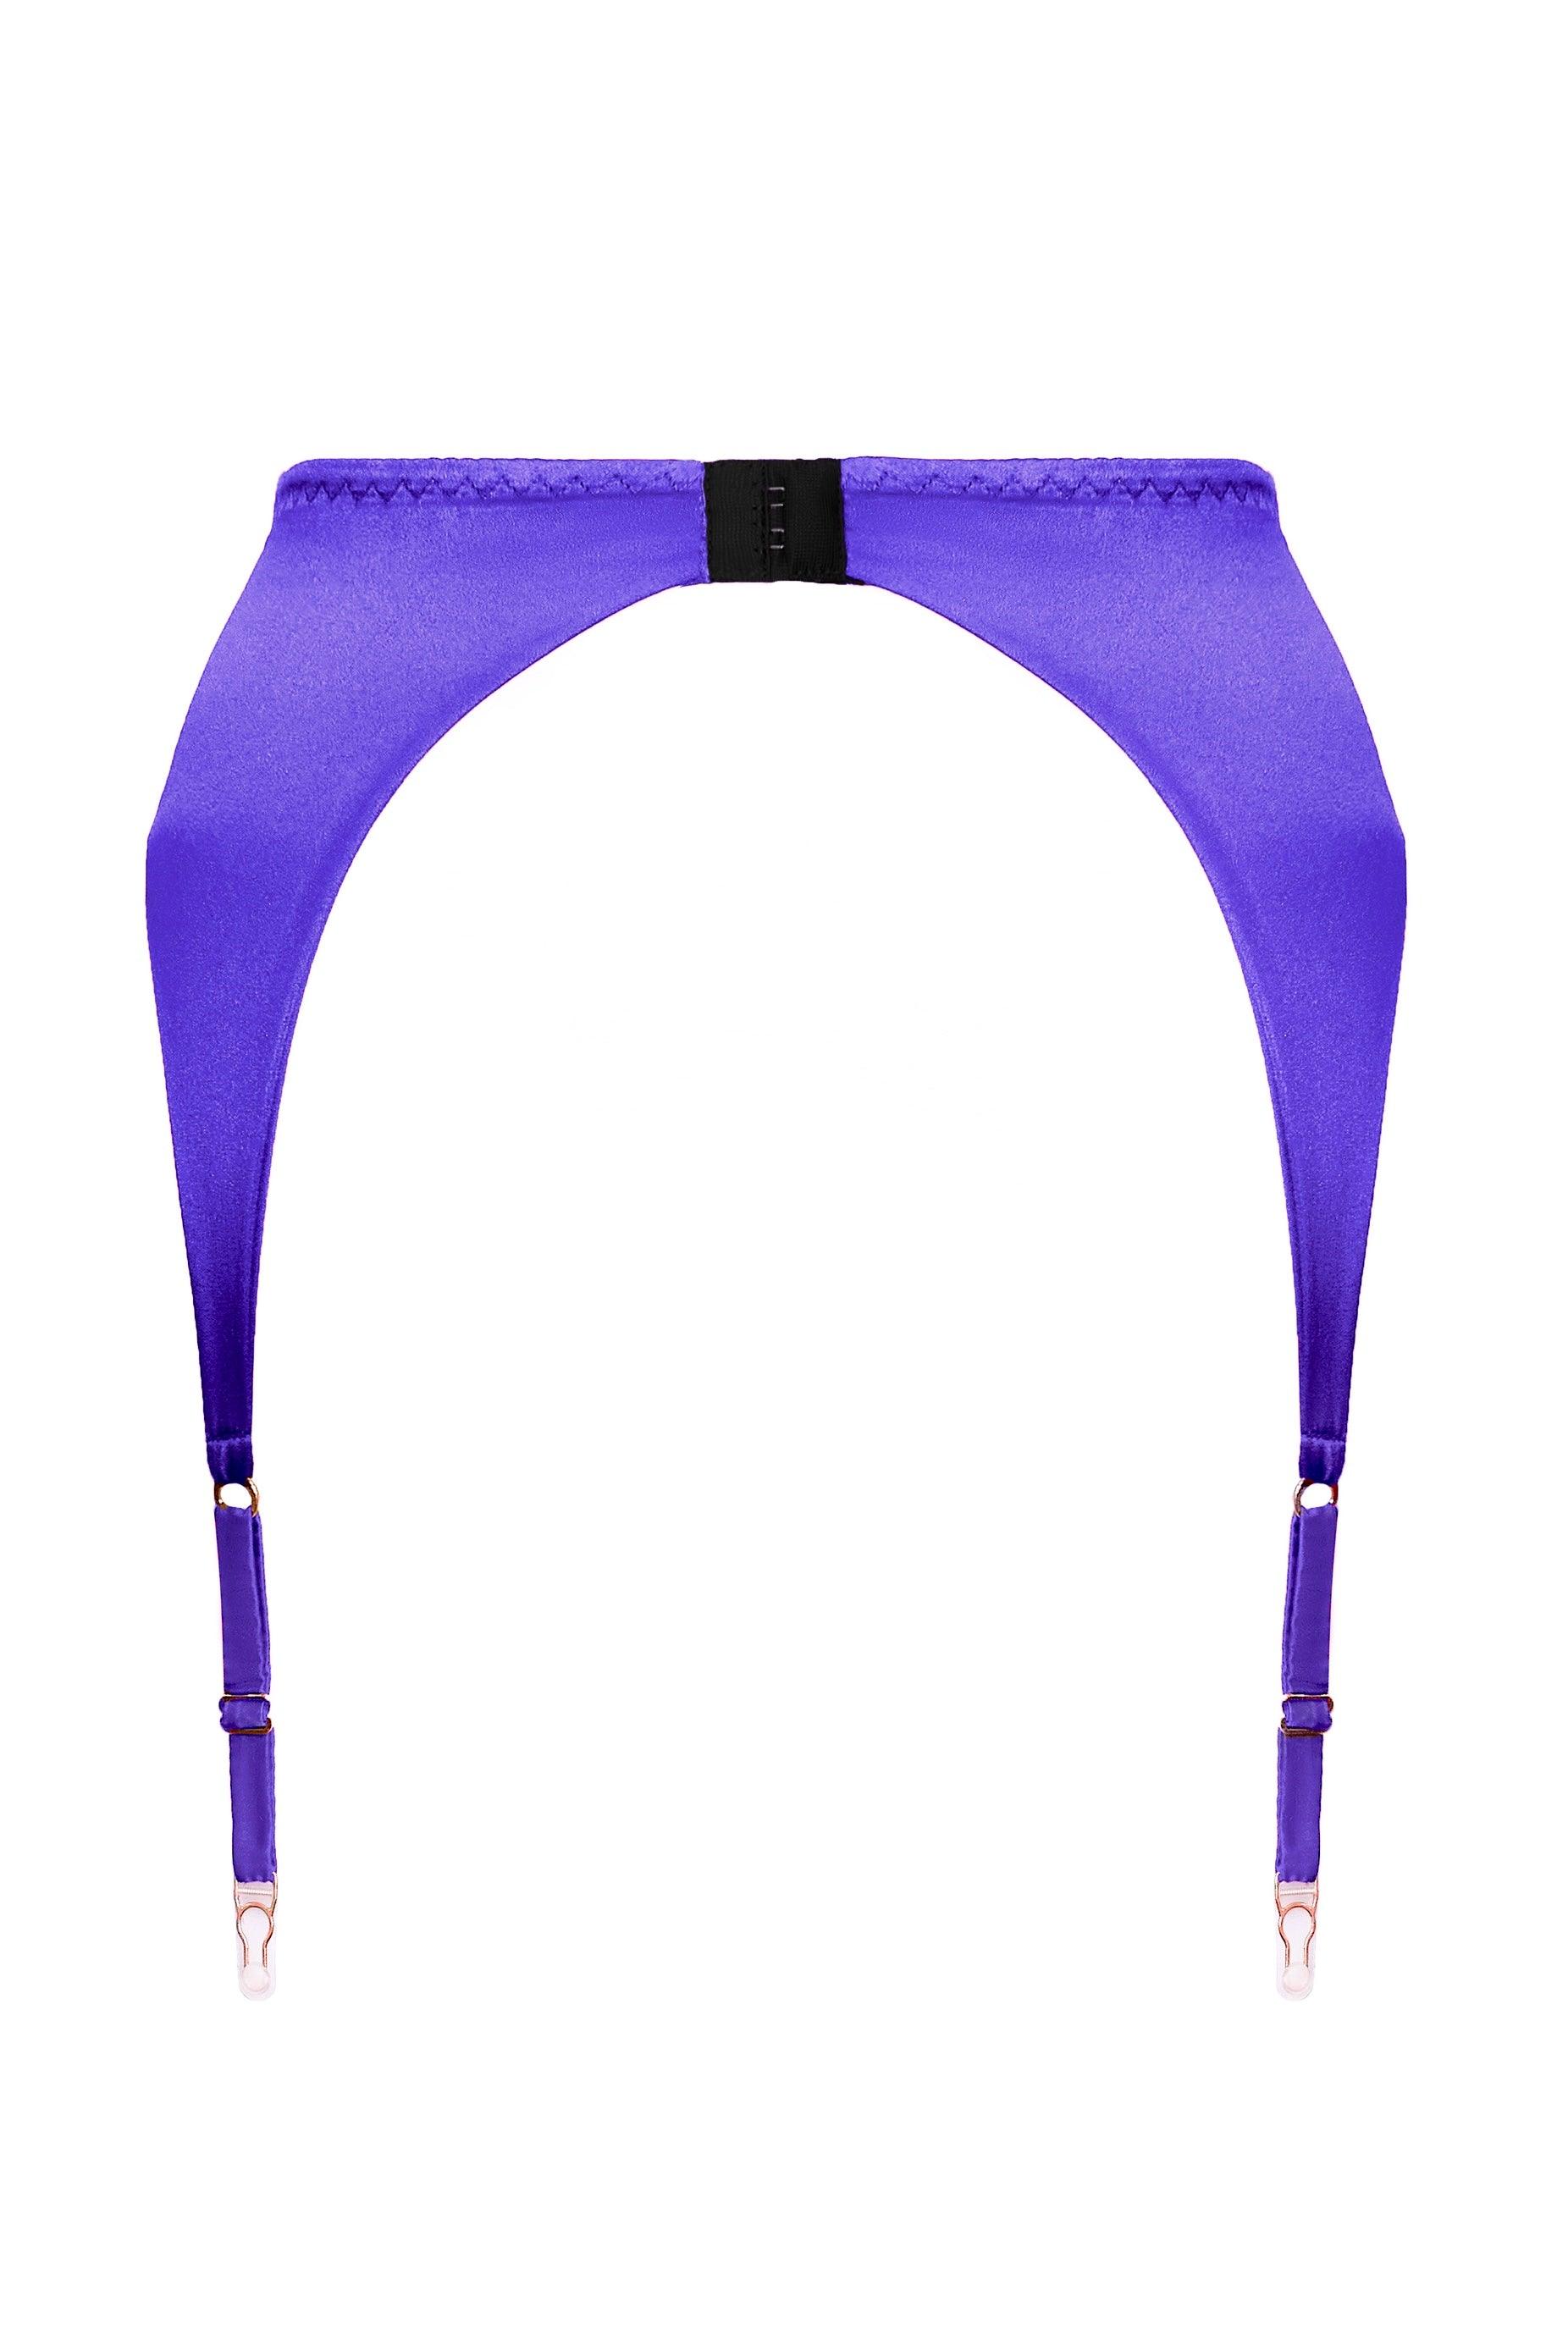 Cymothoe Violet garter belt - yesUndress